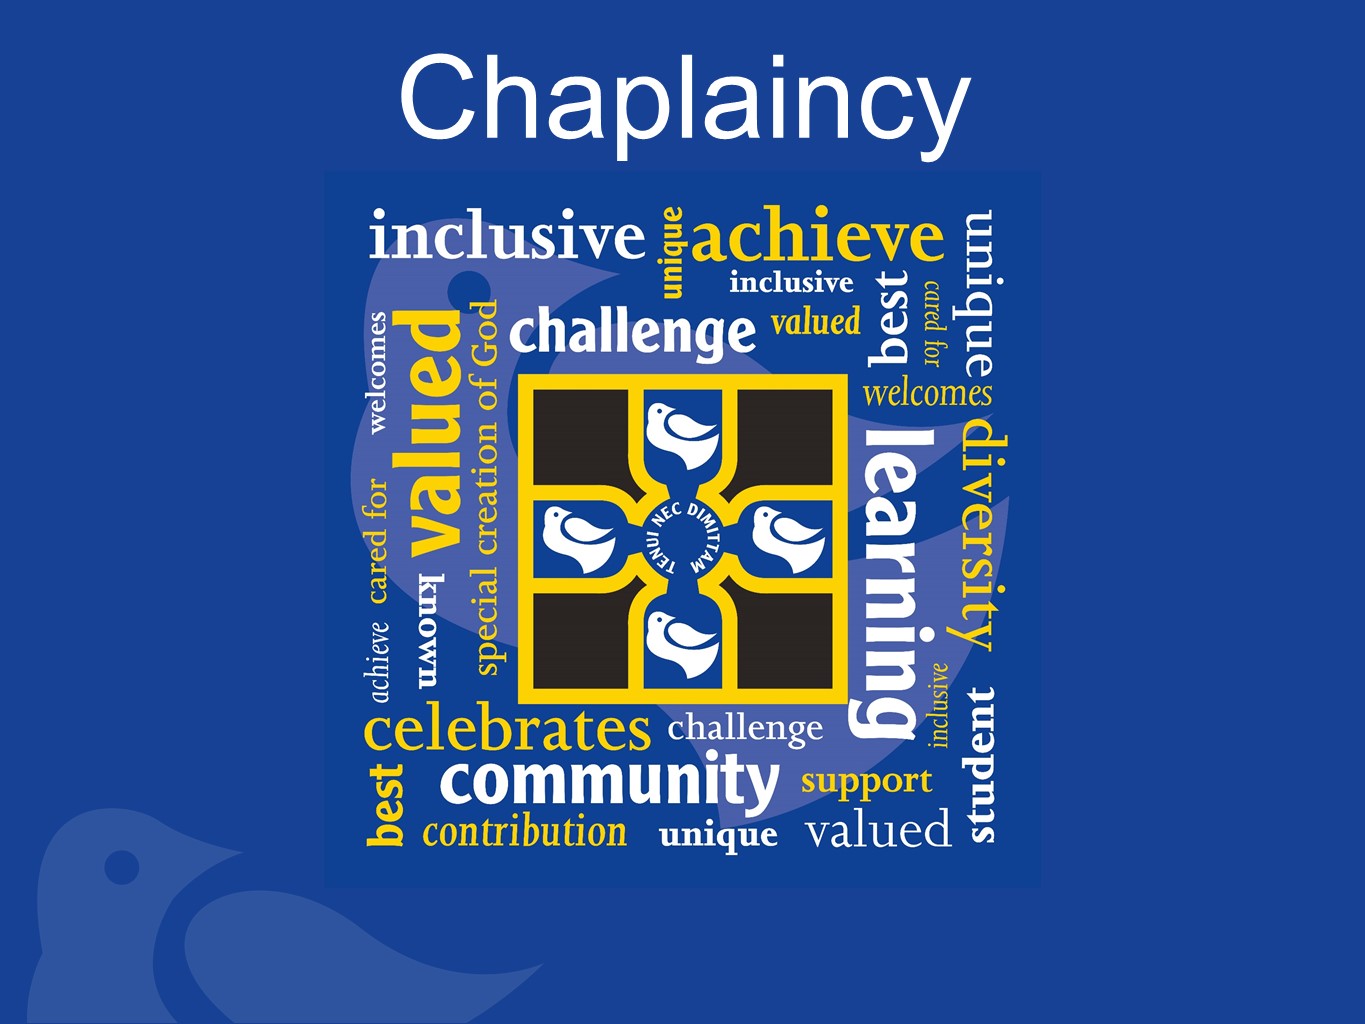 Chaplaincy